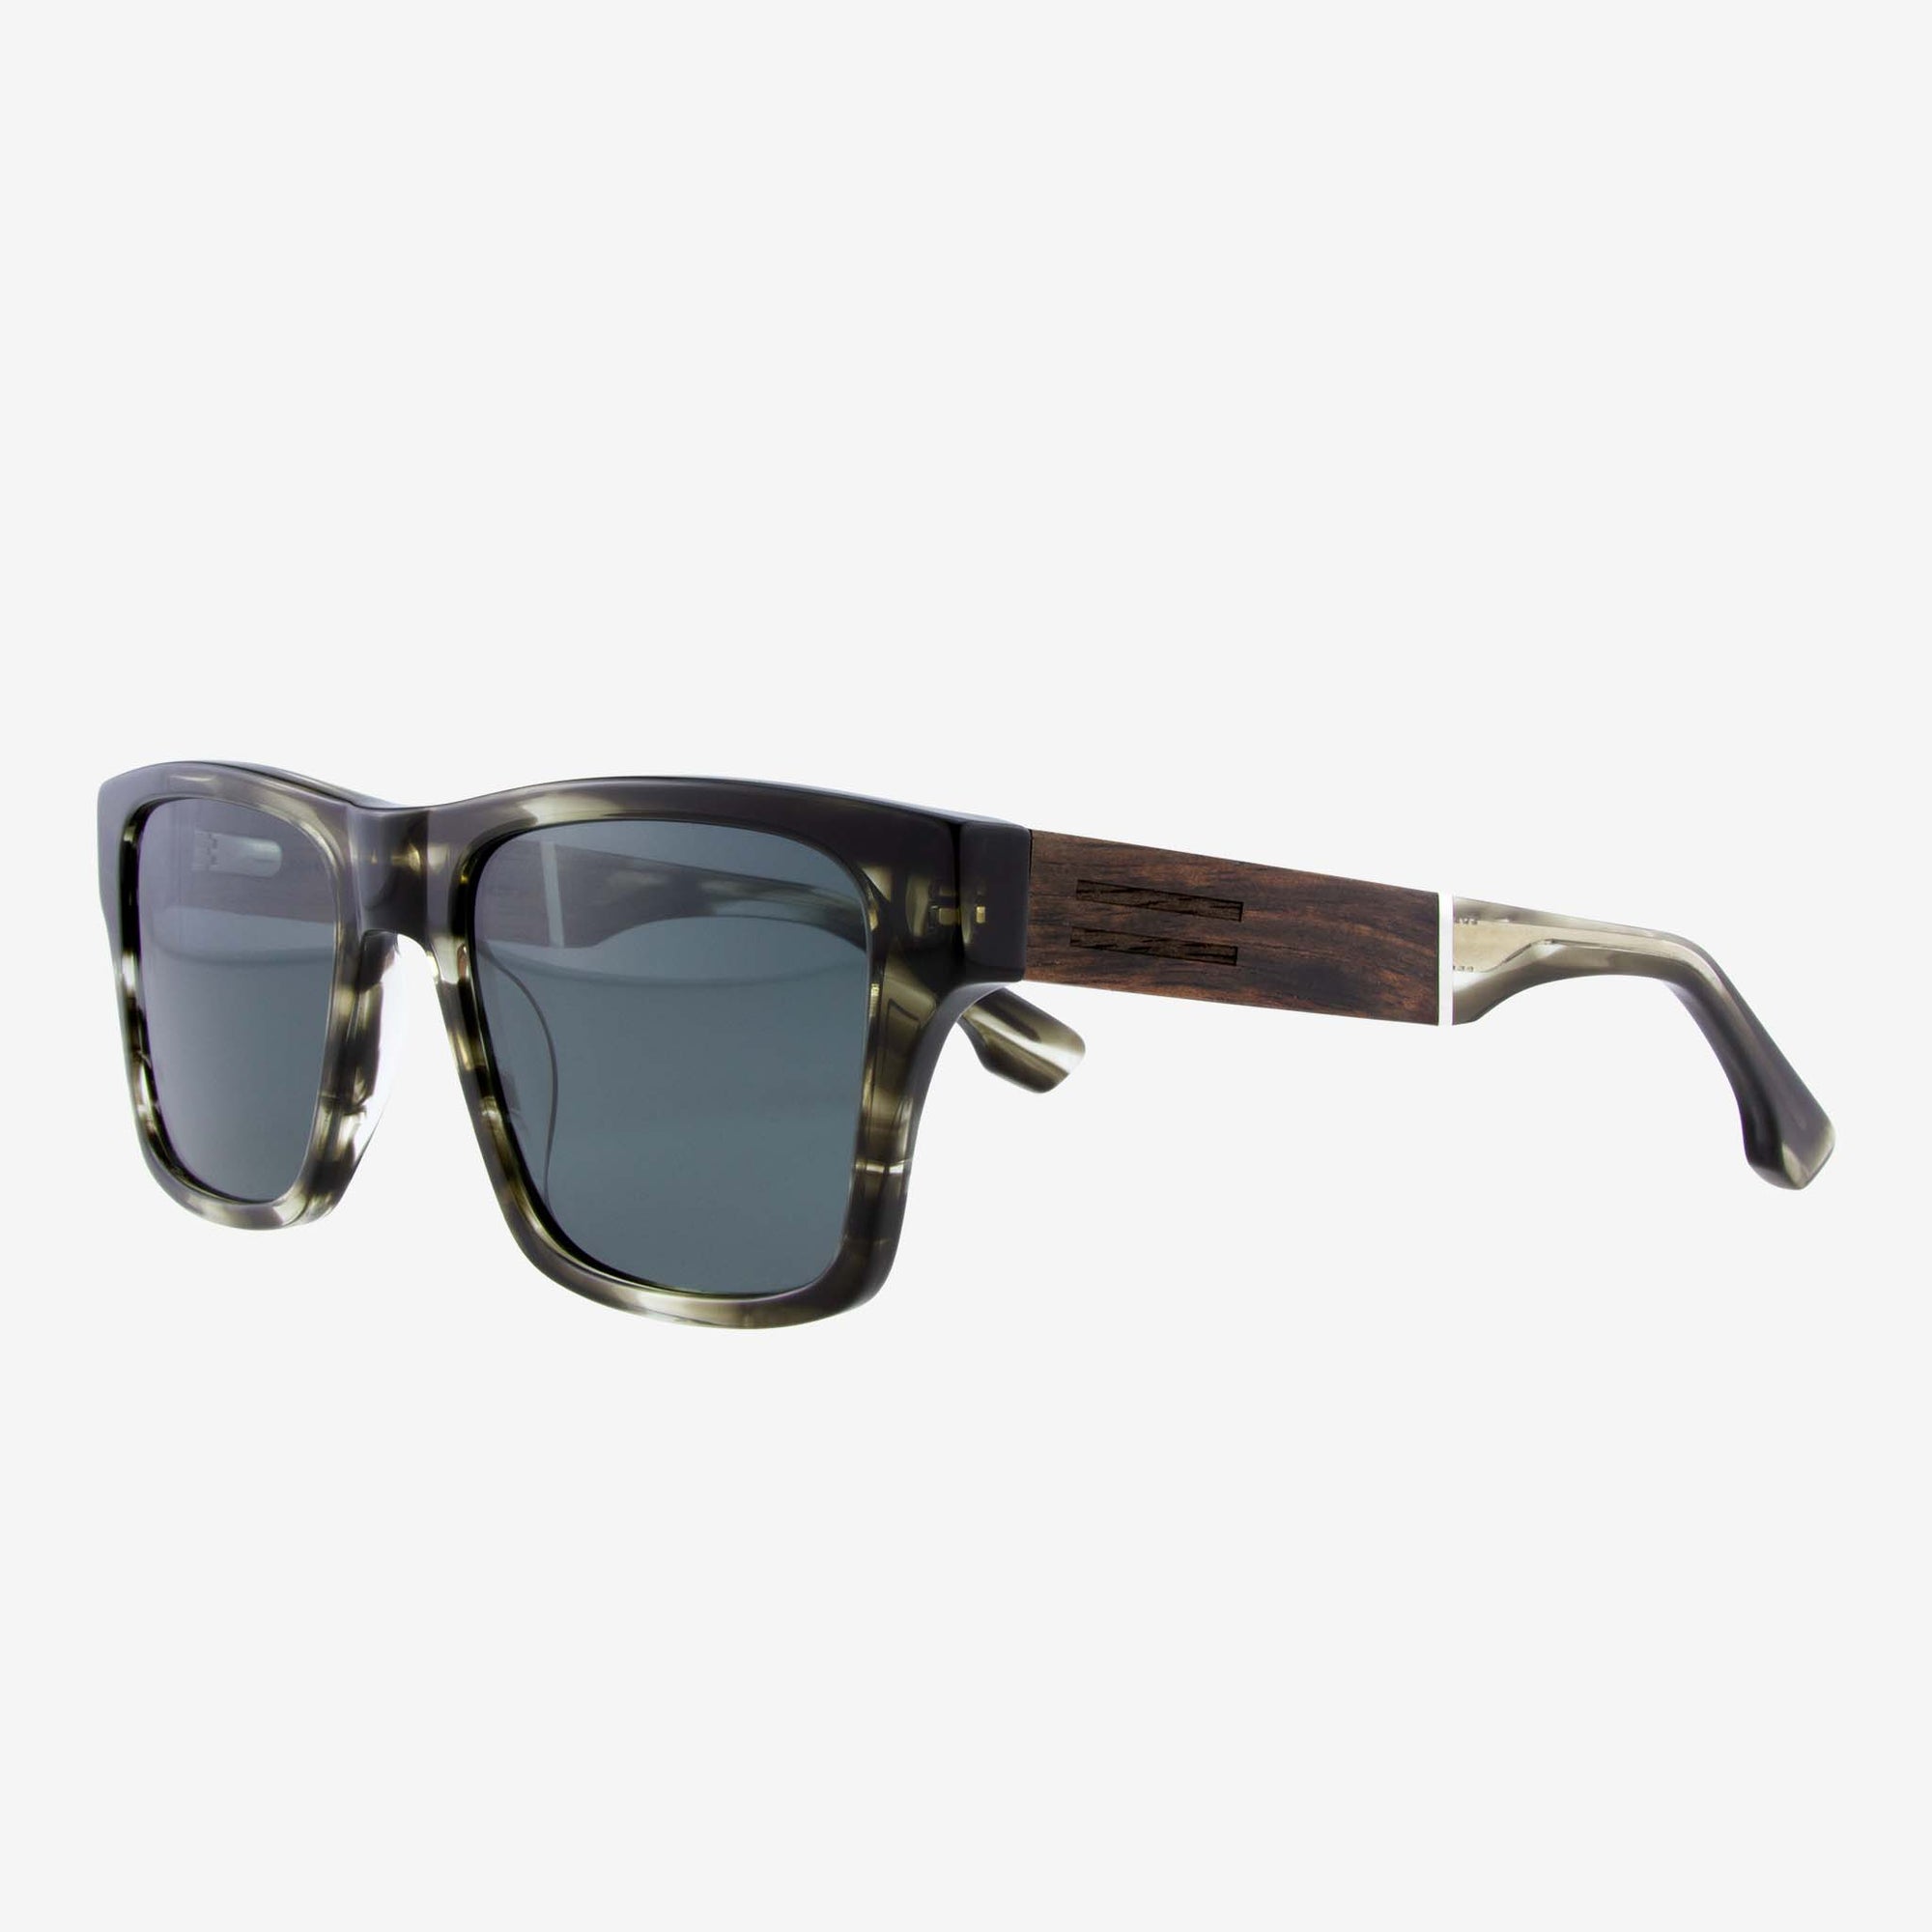 Sebring - Acetate & Wood Sunglasses